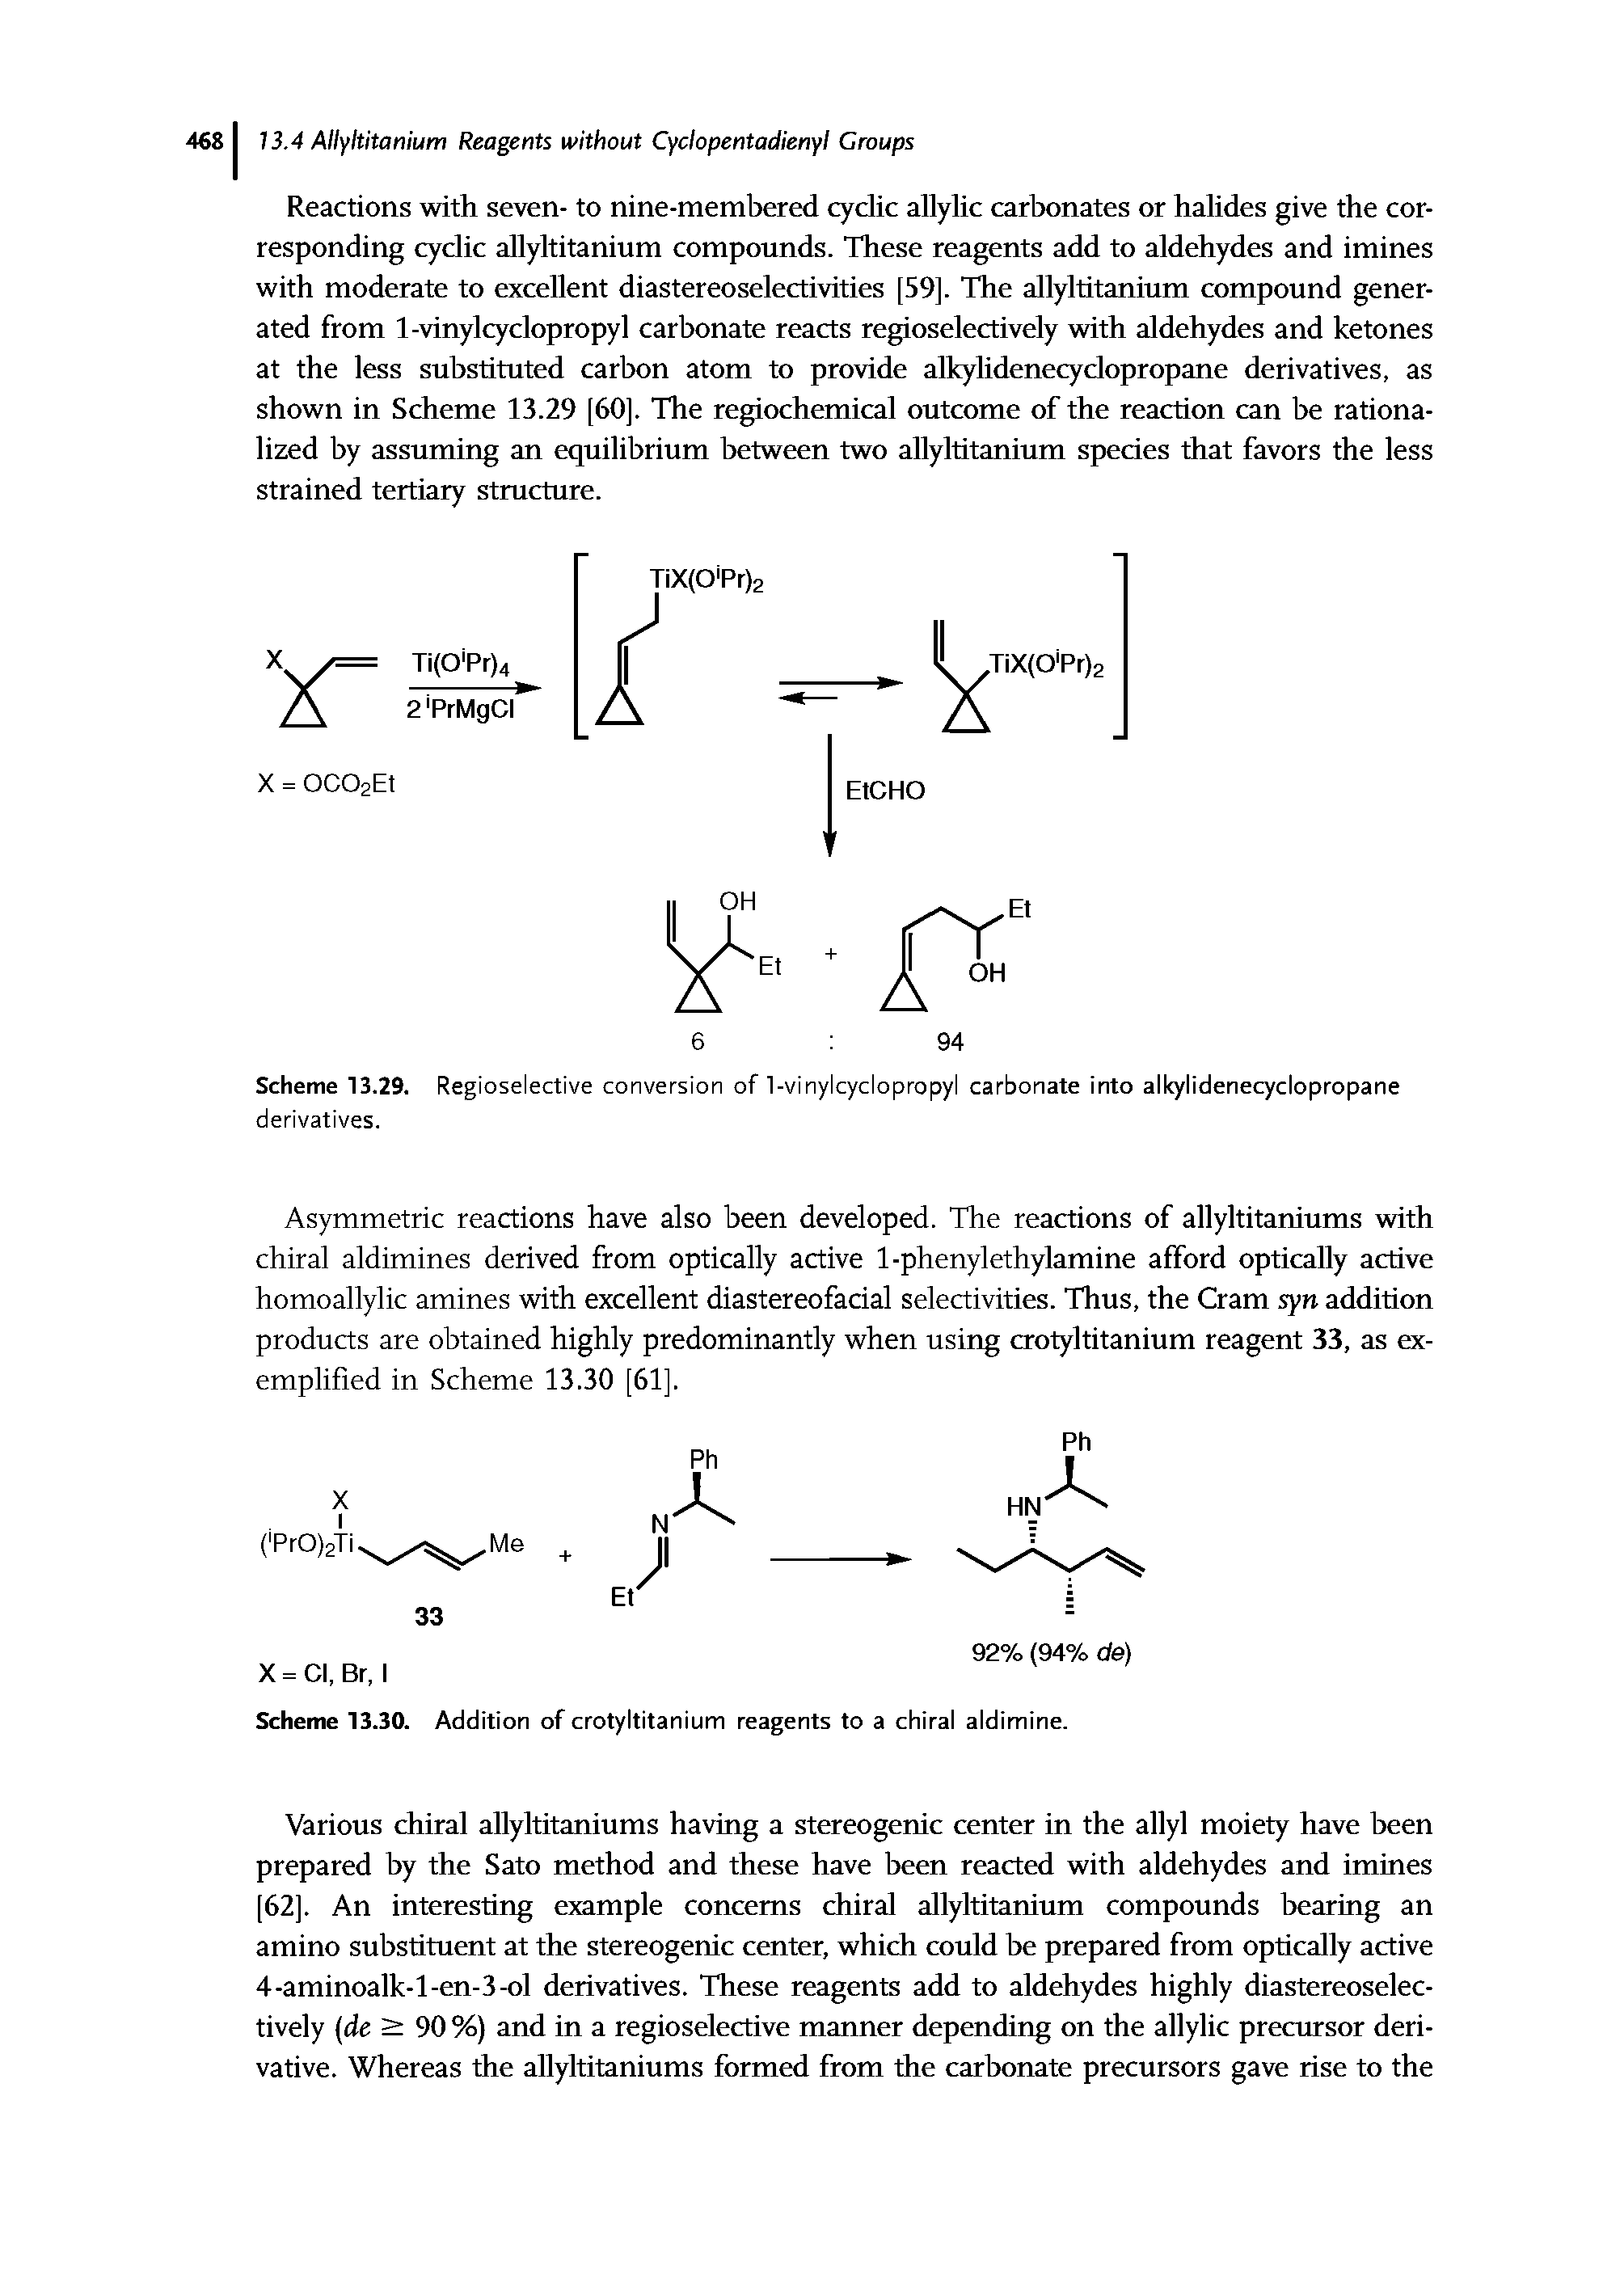 Scheme 13.29. Regioselective conversion of 1-vinylcyclopropyl carbonate into alkylidenecydopropane derivatives.